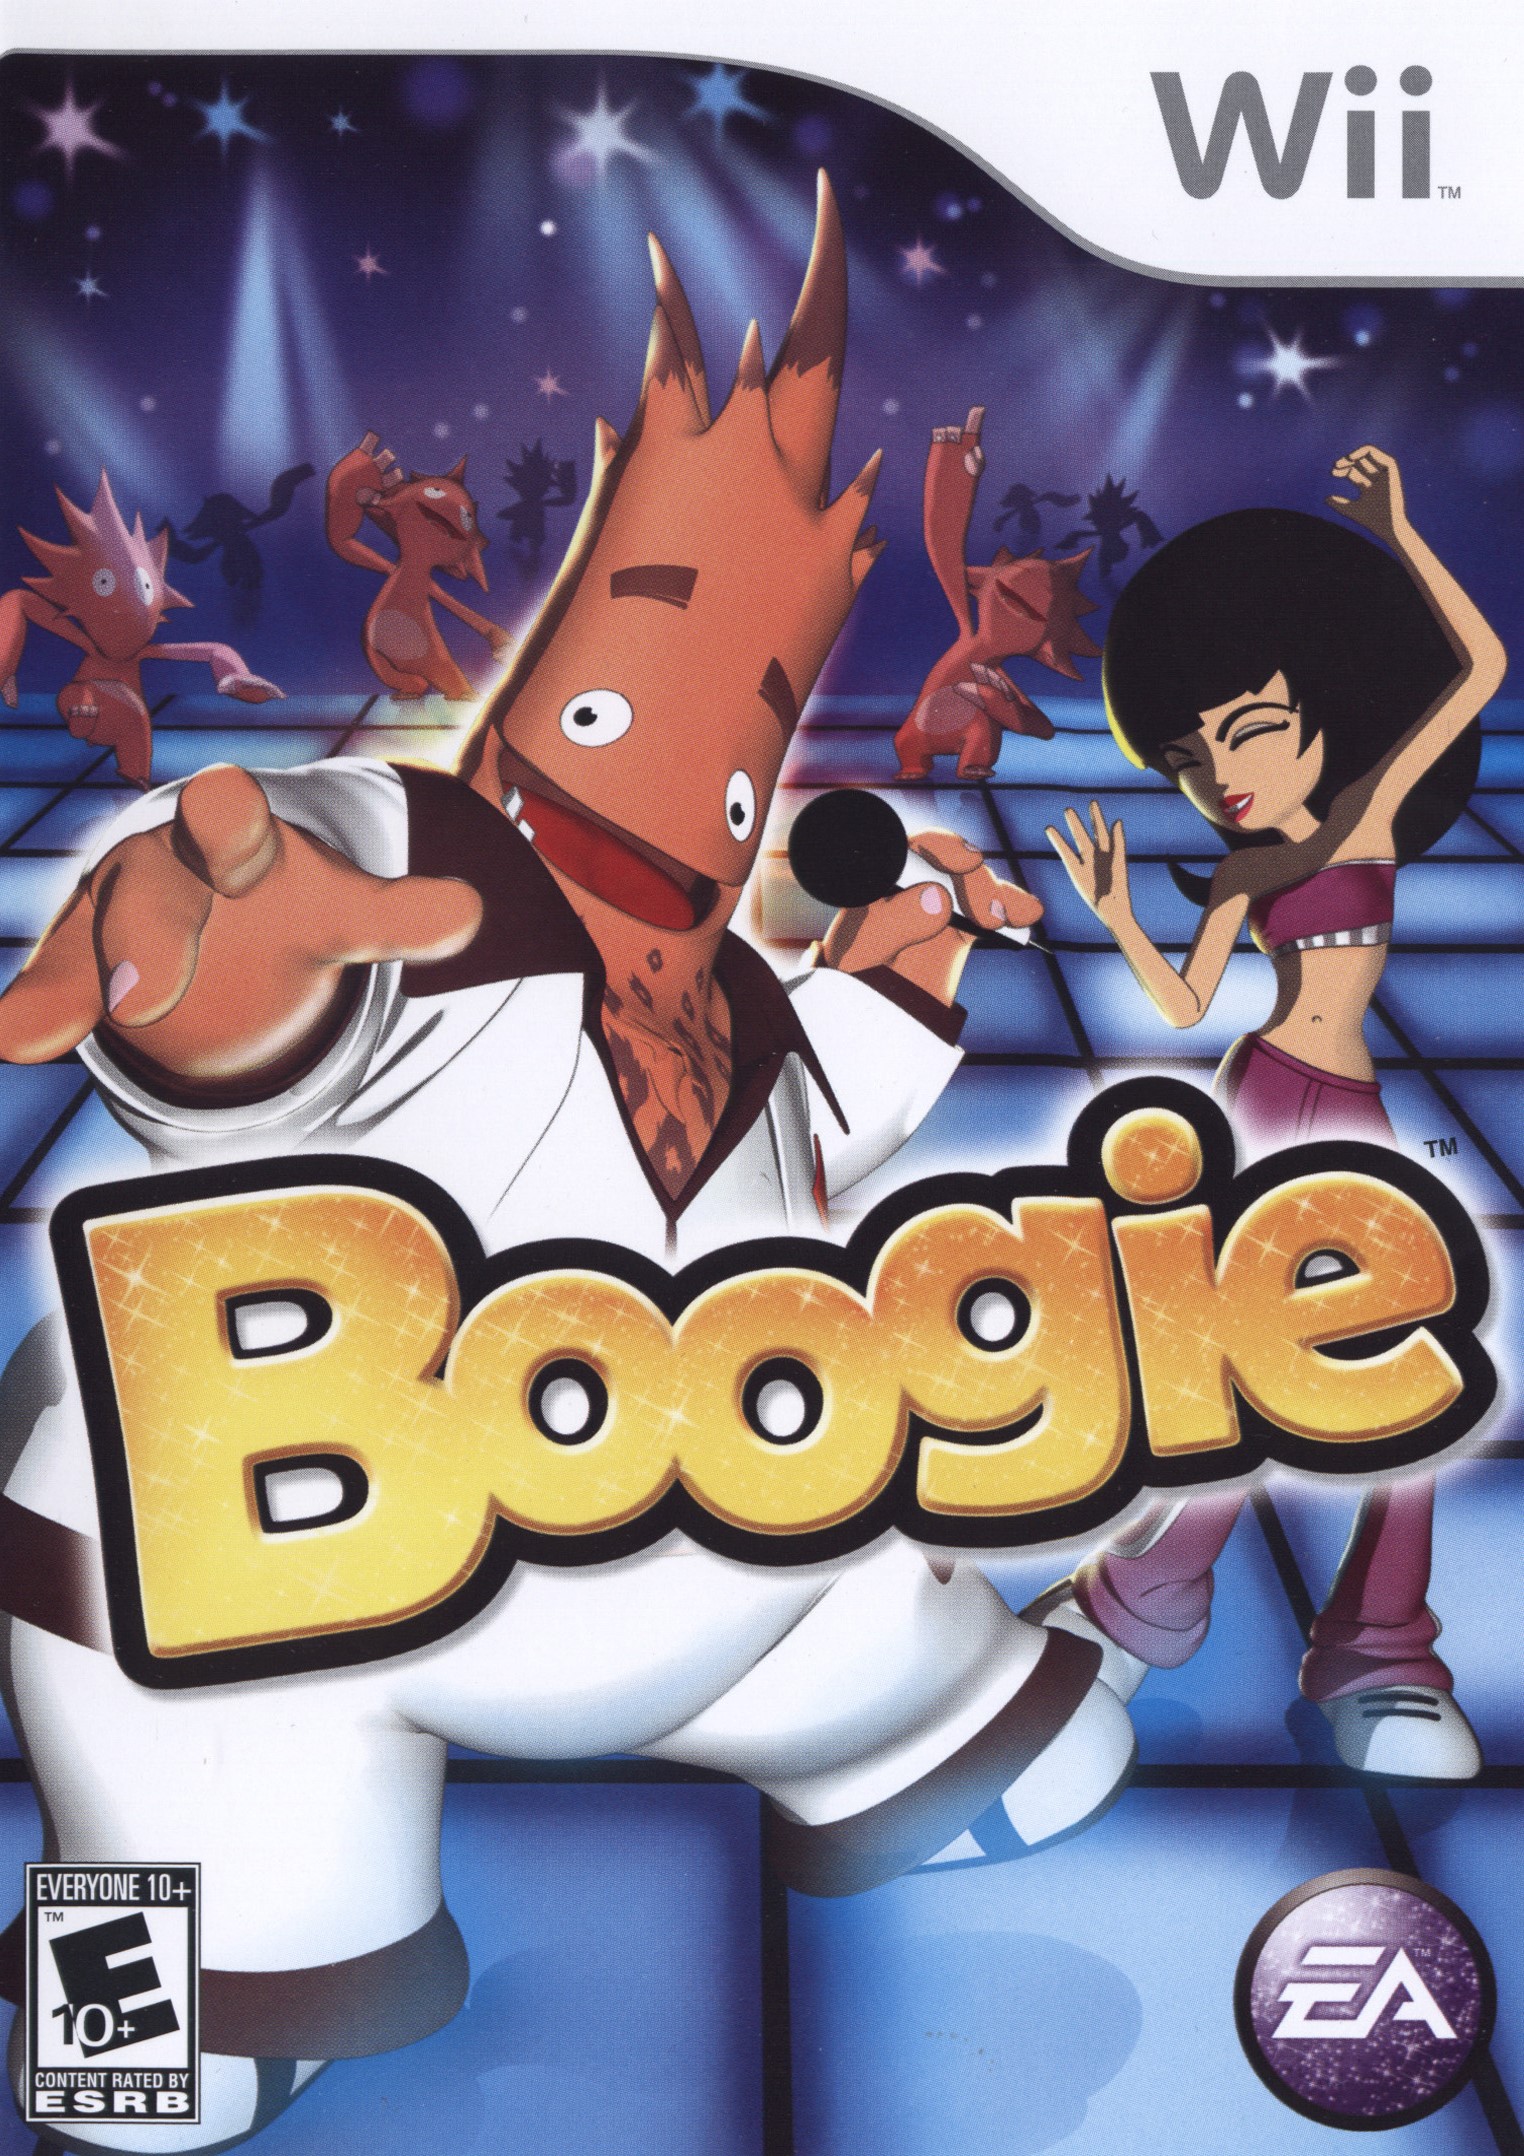 'Boogie'